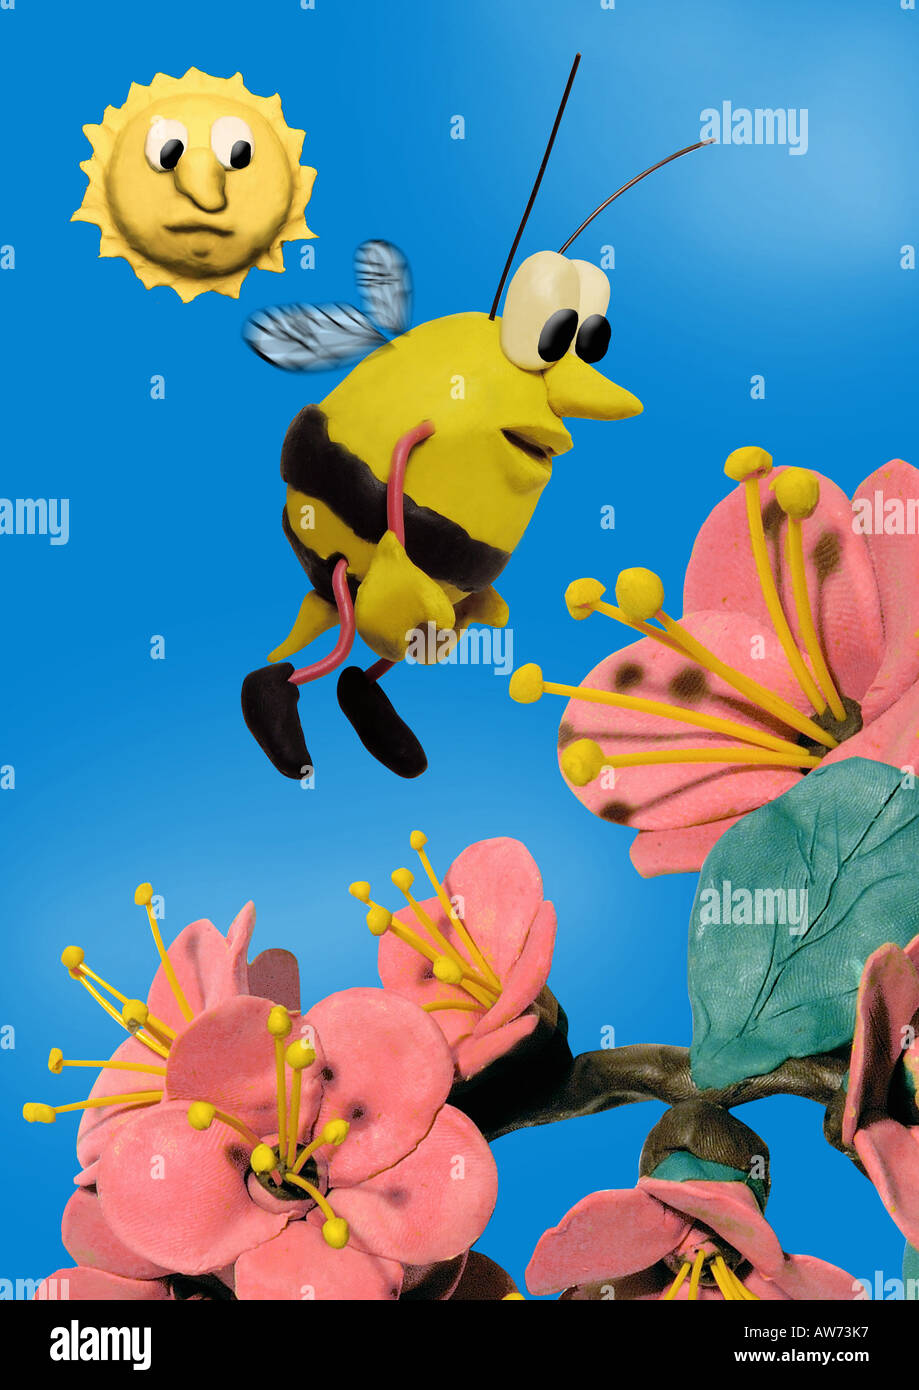 bee-buzzing-around-flowers-AW73K7.jpg